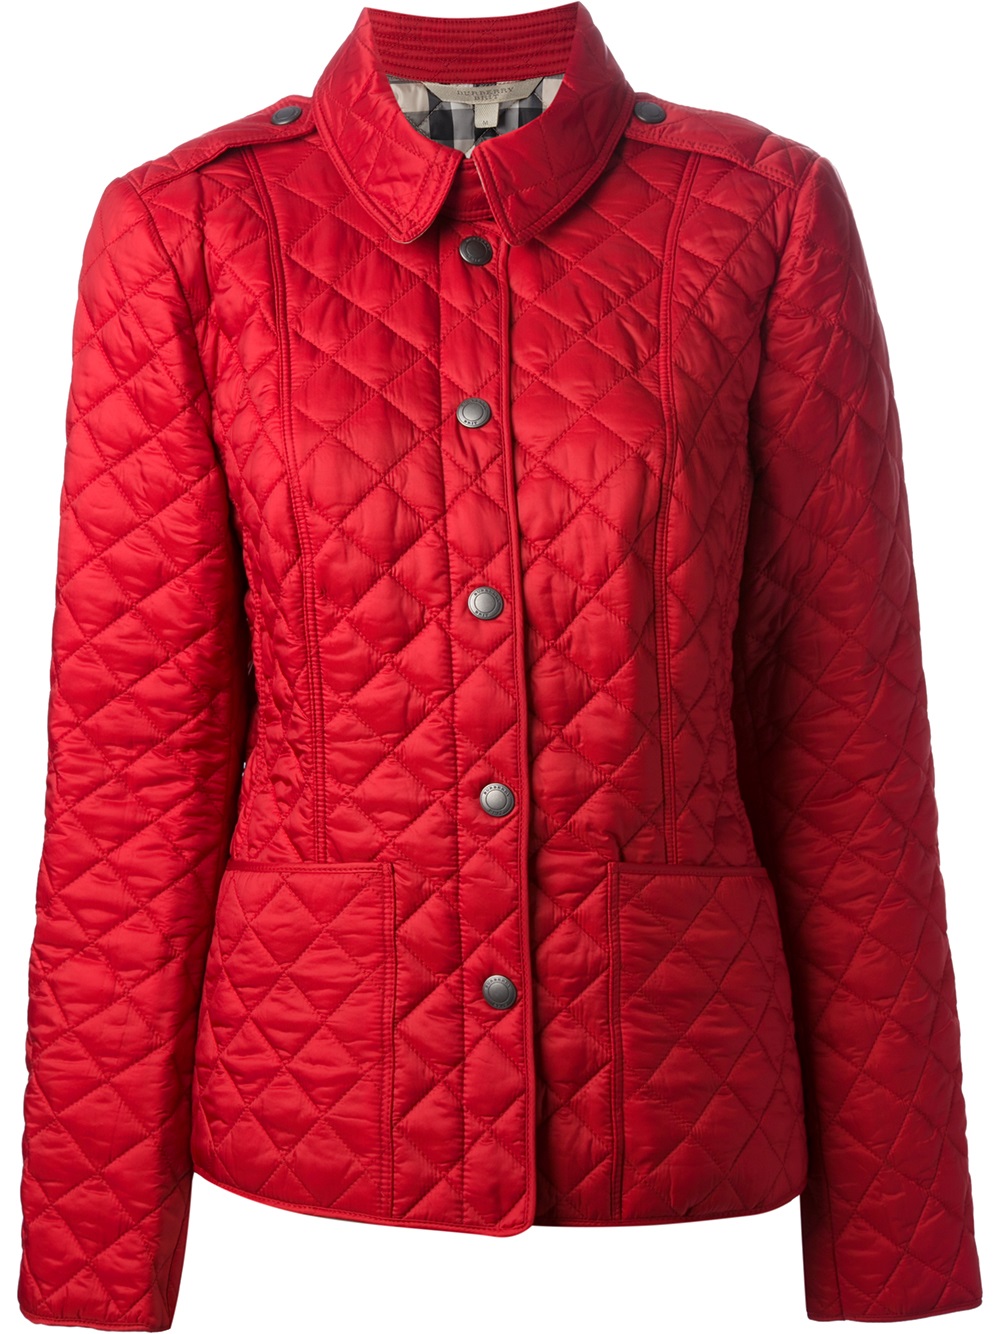 Burberry Womans Jacket Clearance | bellvalefarms.com